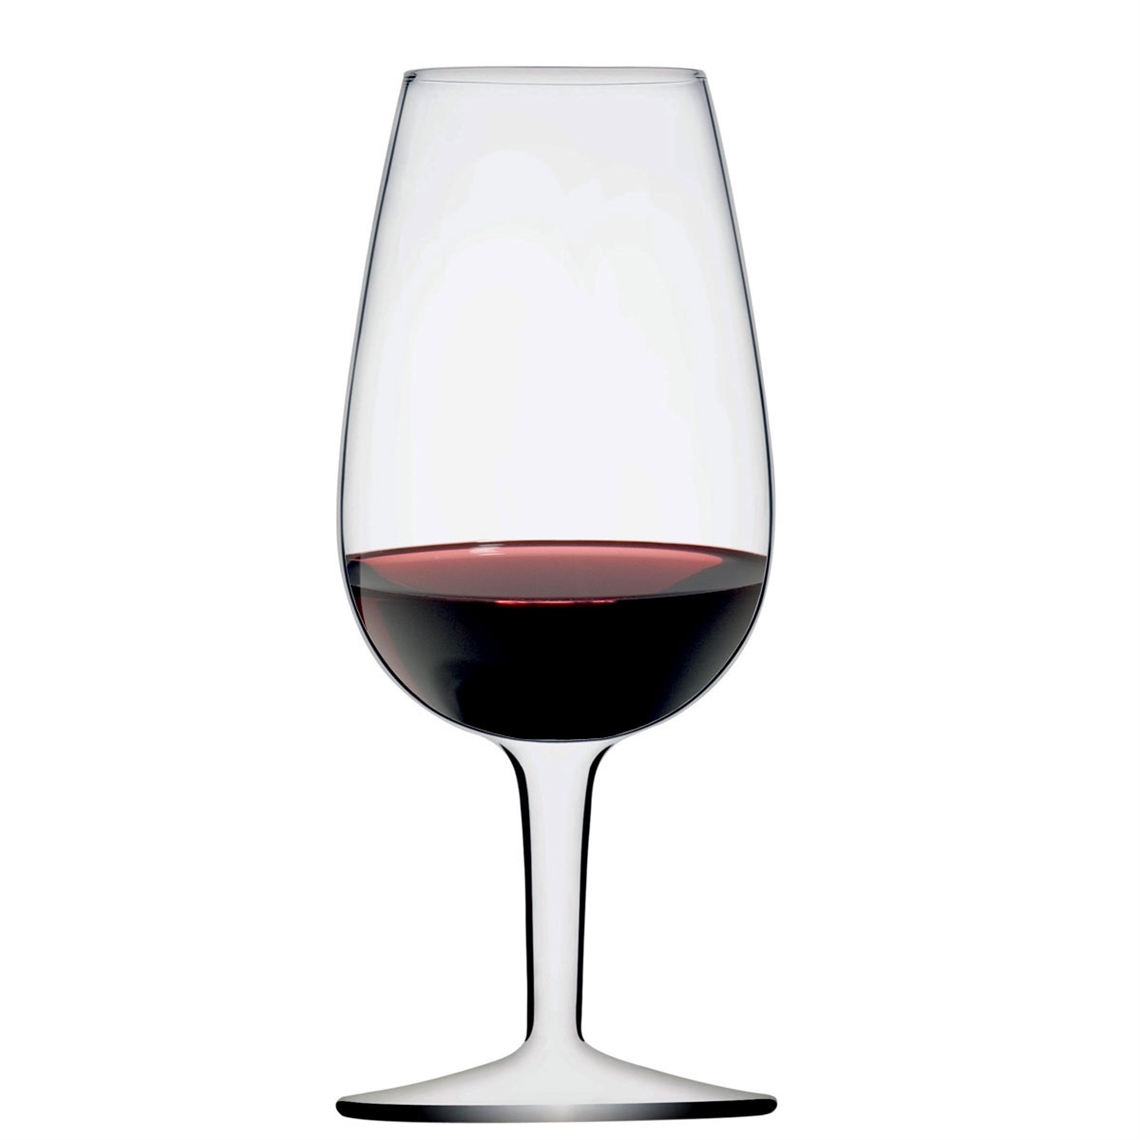 View more luigi bormioli from our Wine Tasting Glasses range